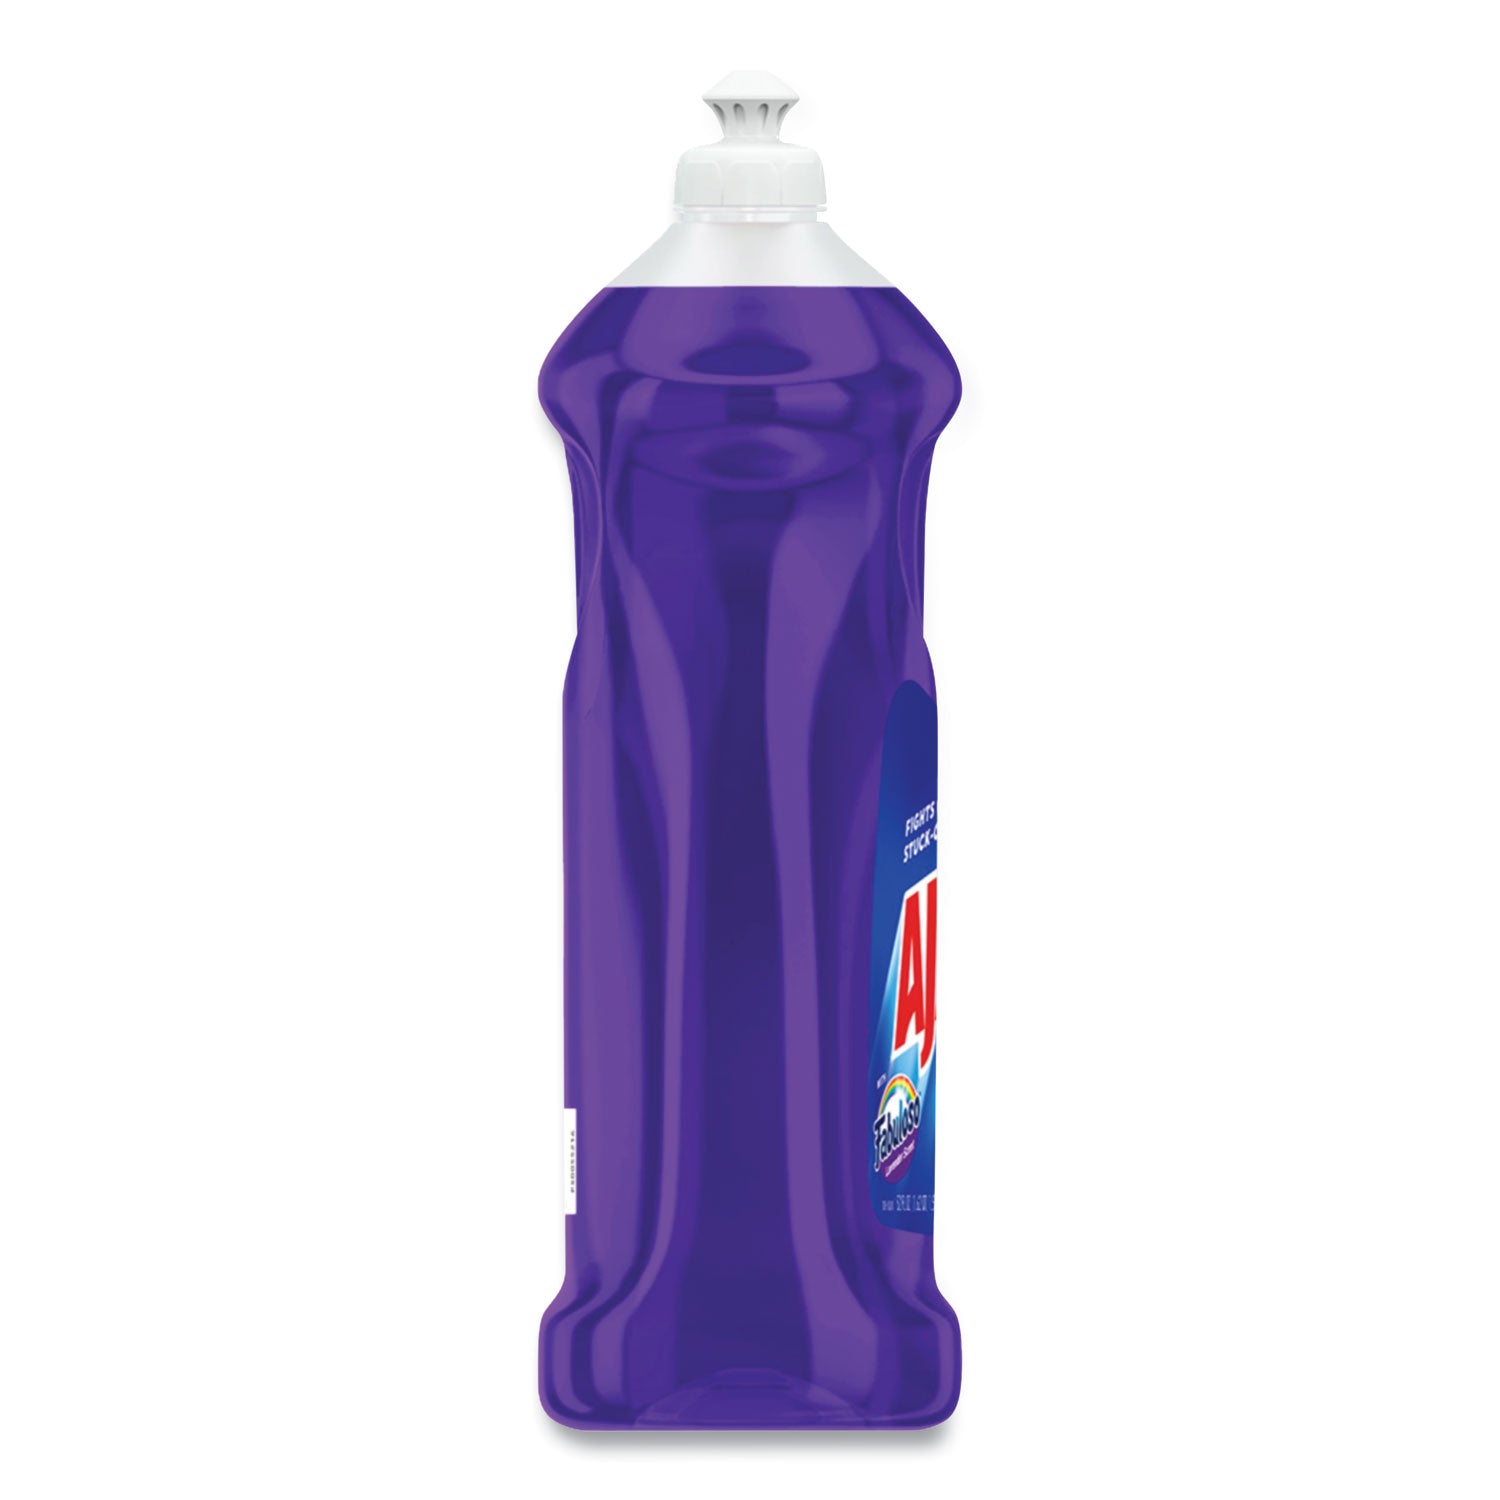 dish-detergent-fabuloso-lavender-scent-52-oz-bottle-6-carton_cpc61039226ct - 2